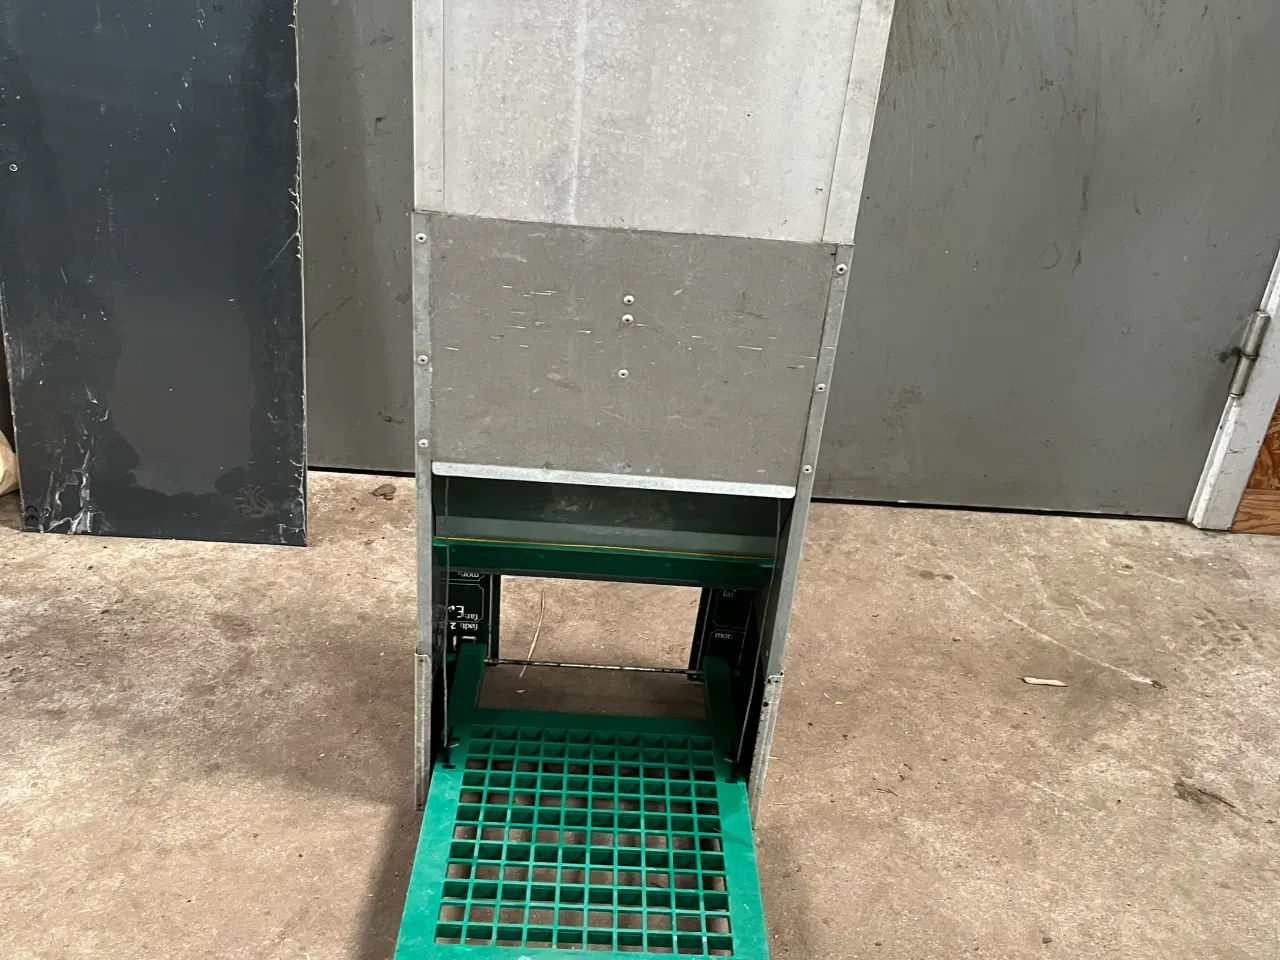 Billede 1 - Hønse foderautomat feed-o-matic